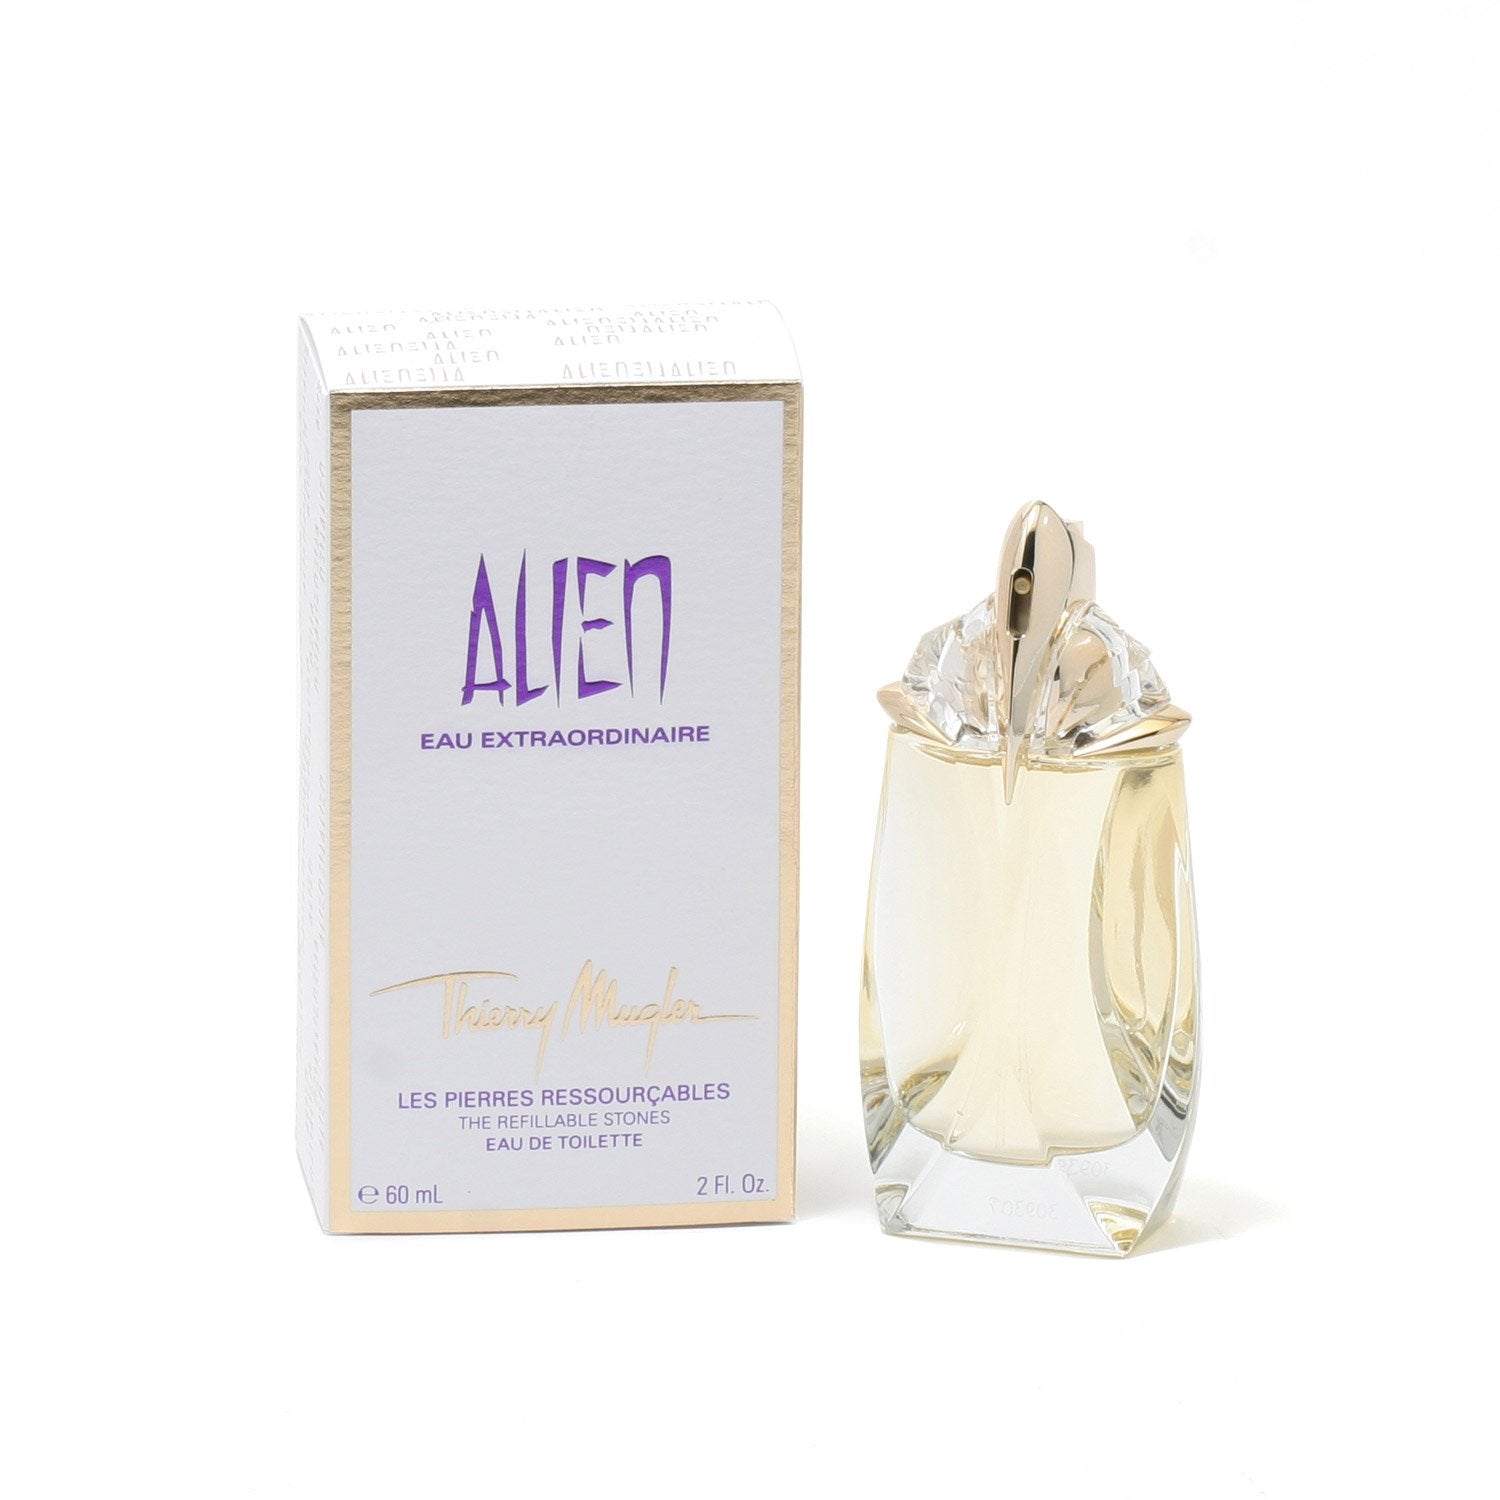 Perfume - ALIEN EAU EXTRAORDINAIRE FOR WOMEN BY THIERRY MUGLER REFILLABLE - EAU DE TOILETTE SPRAY, 2.0 OZ